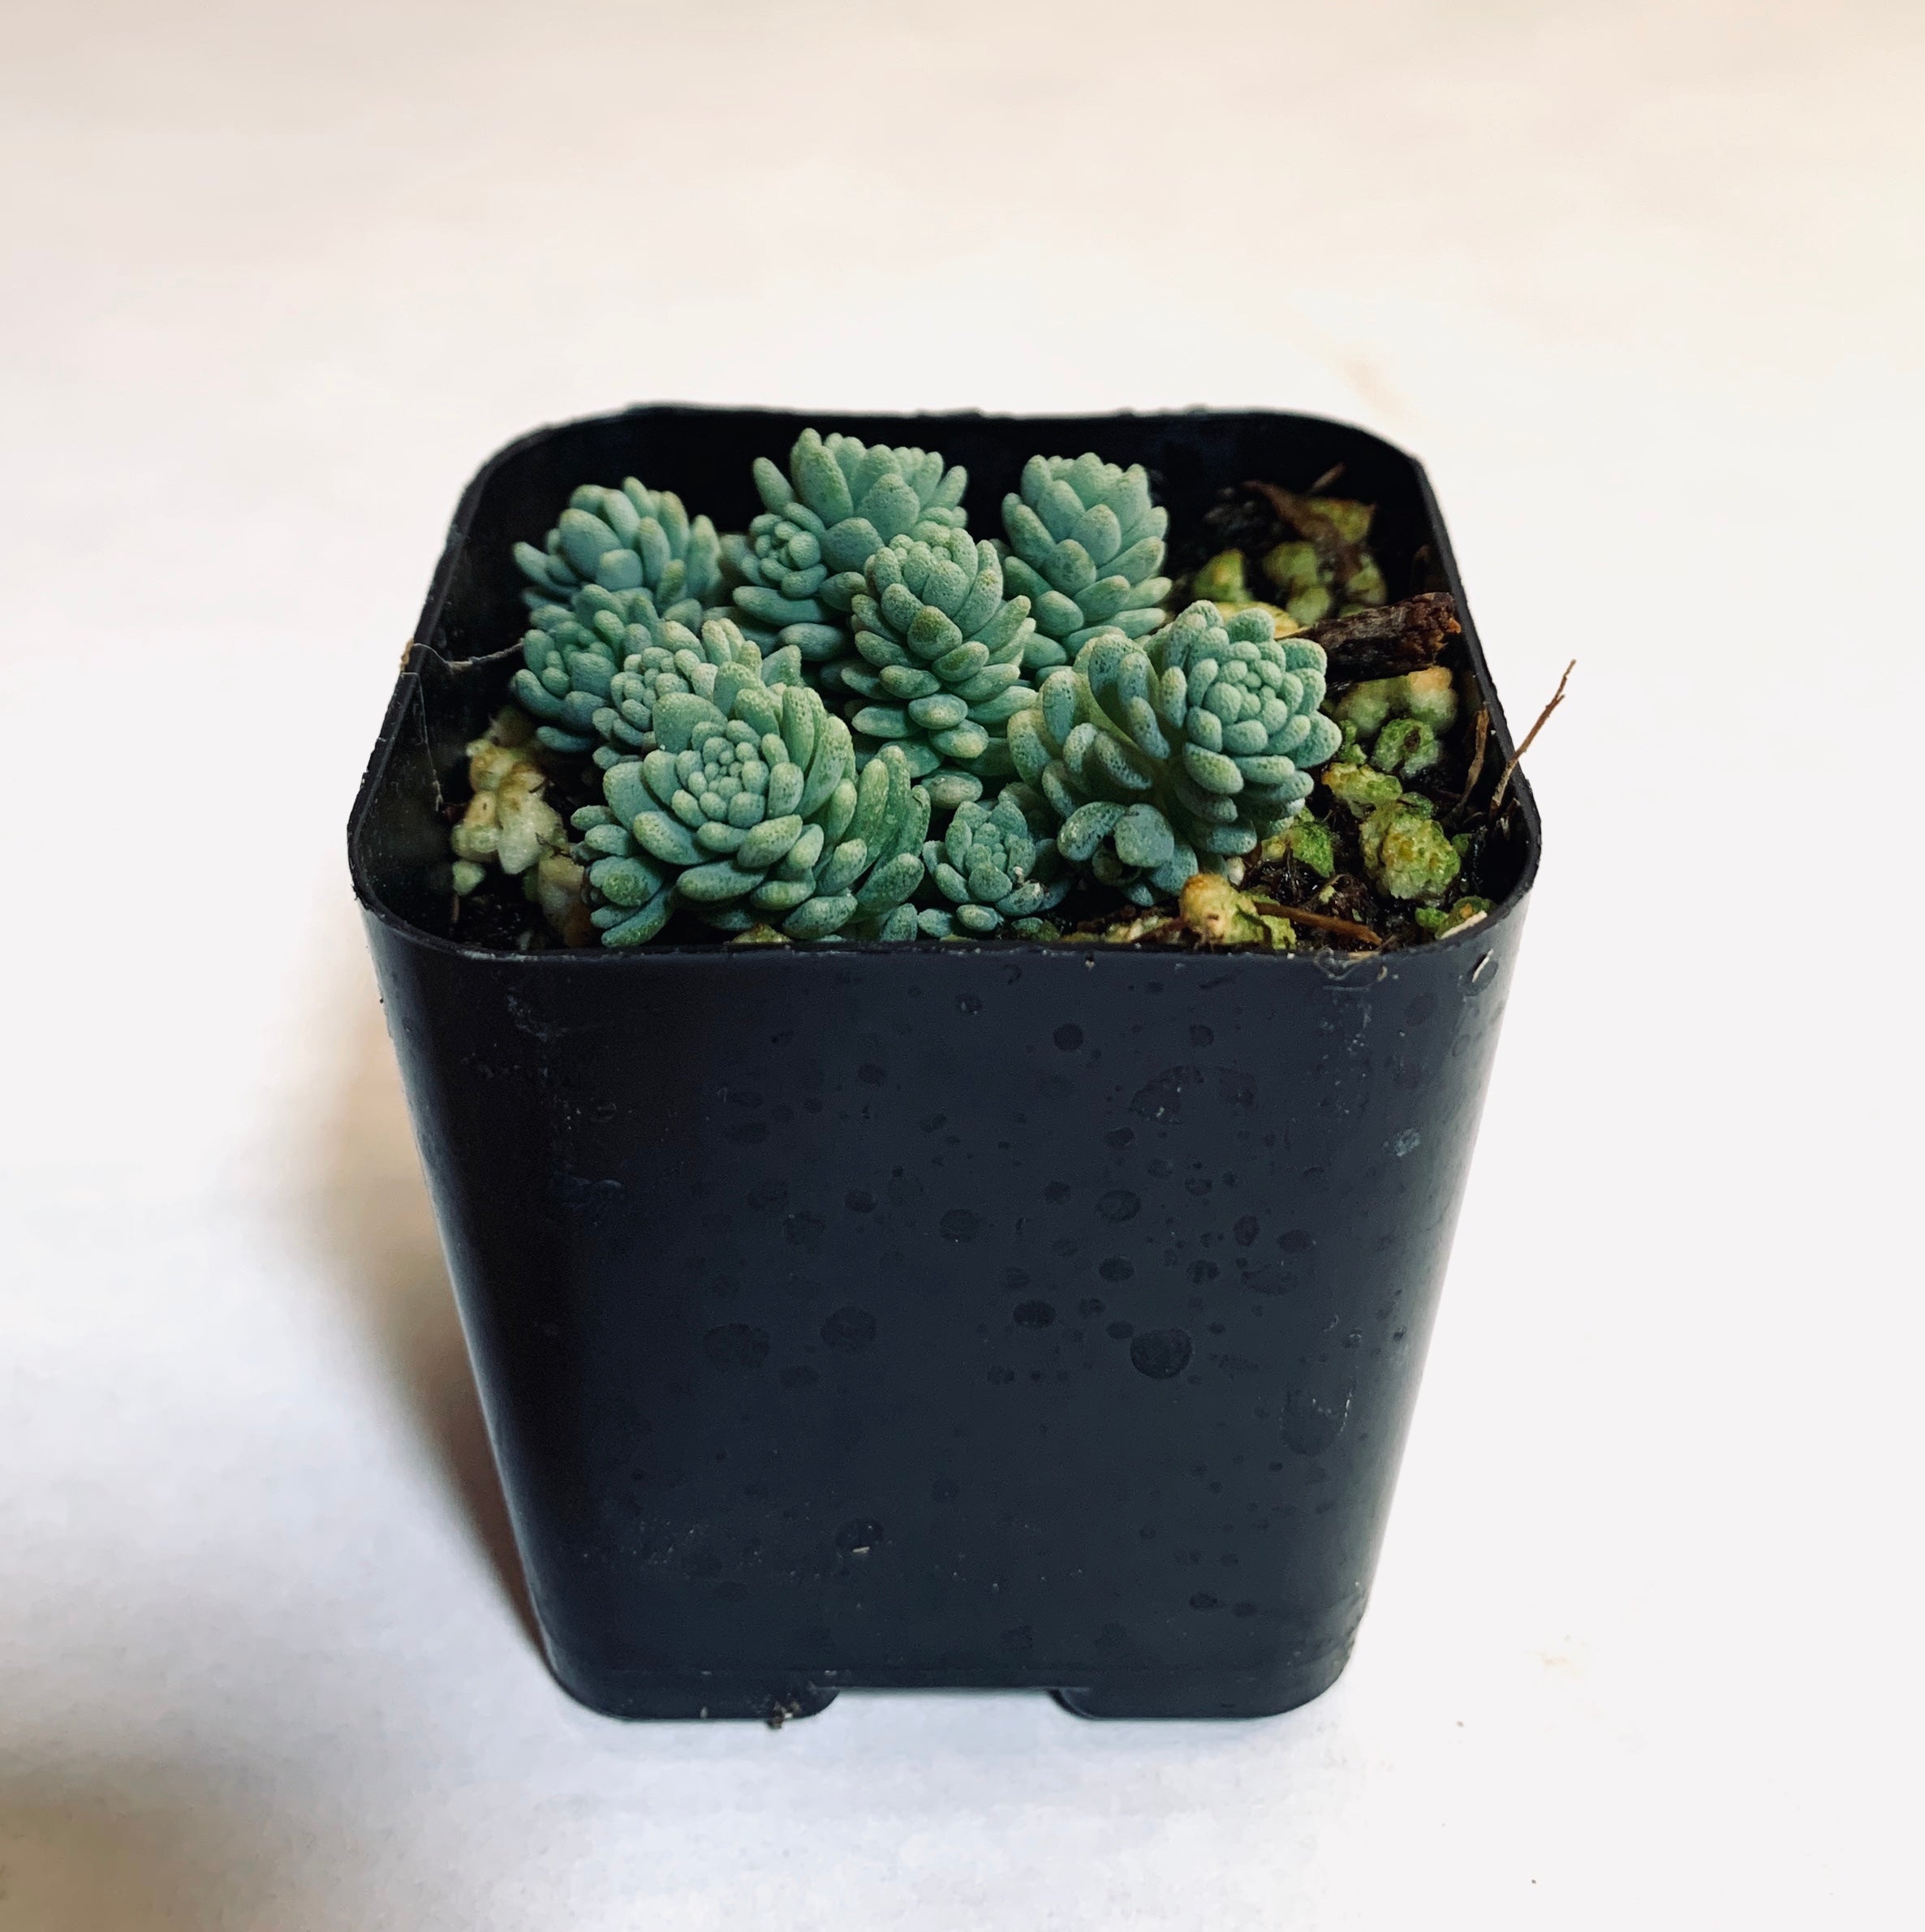 Sedum Fuzzy Wuzzy: a closeup of a low-growing succulent which forms a dense mat of miniature blue-green rosettes.